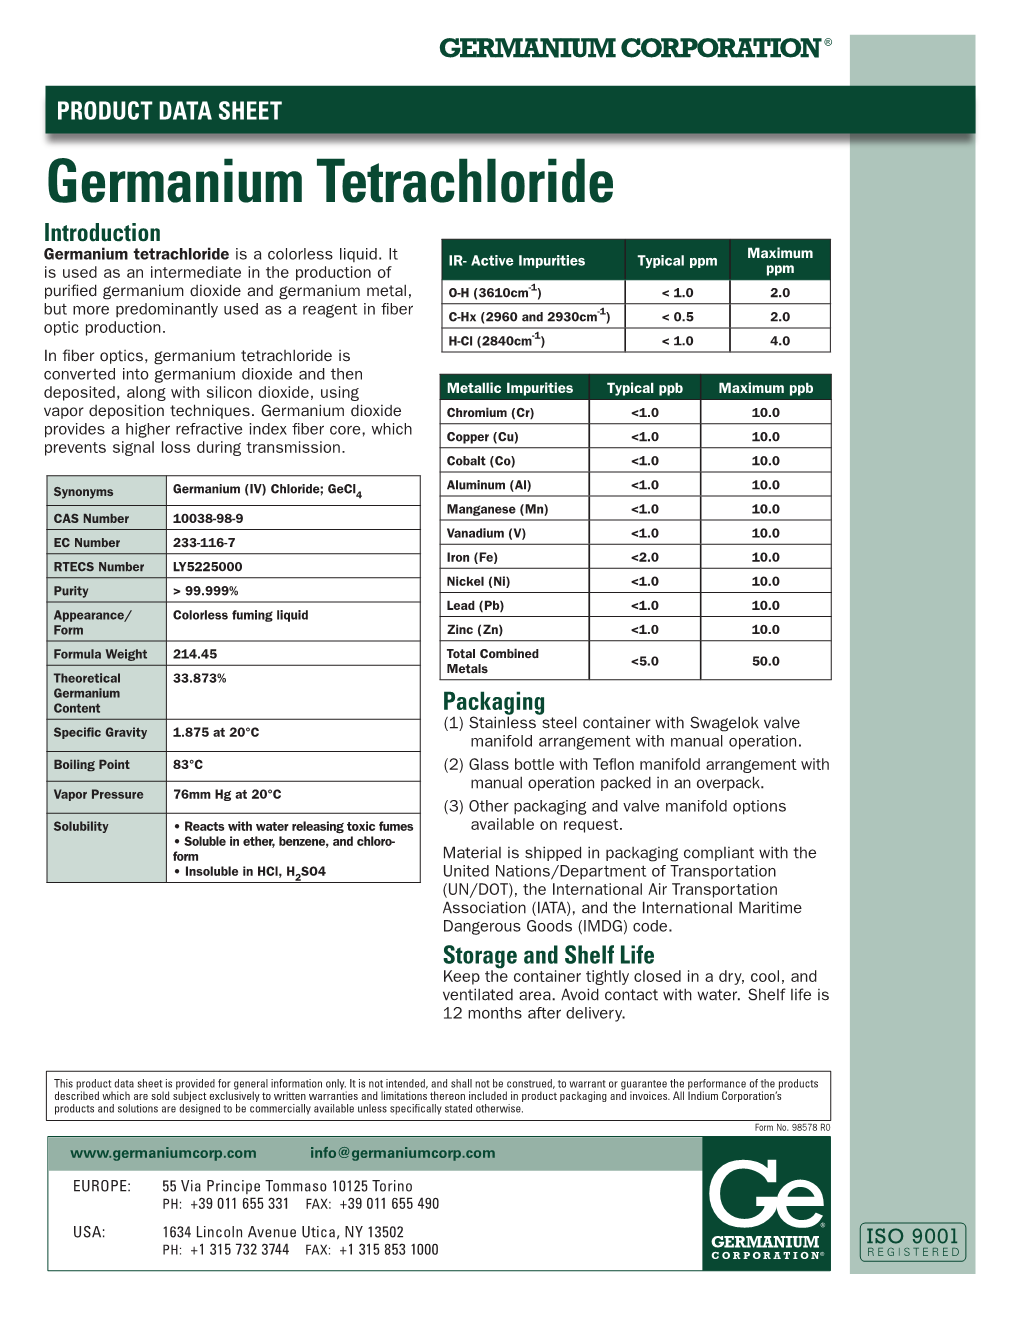 Germanium Tetrachloride 98578 R0